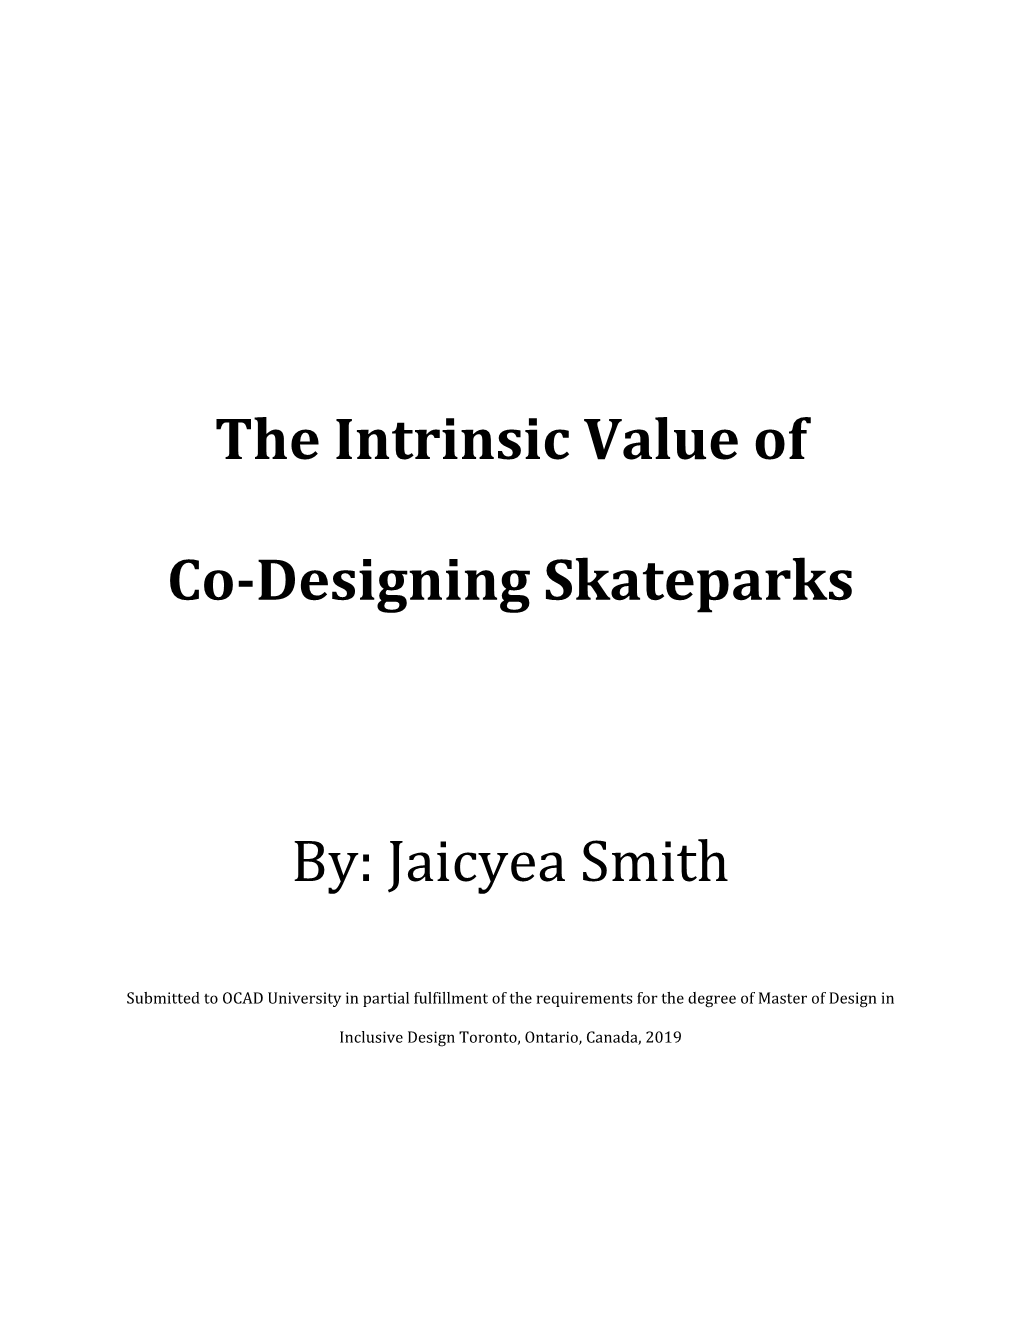 The Instrinsic Value of Co-Designing Skateparks